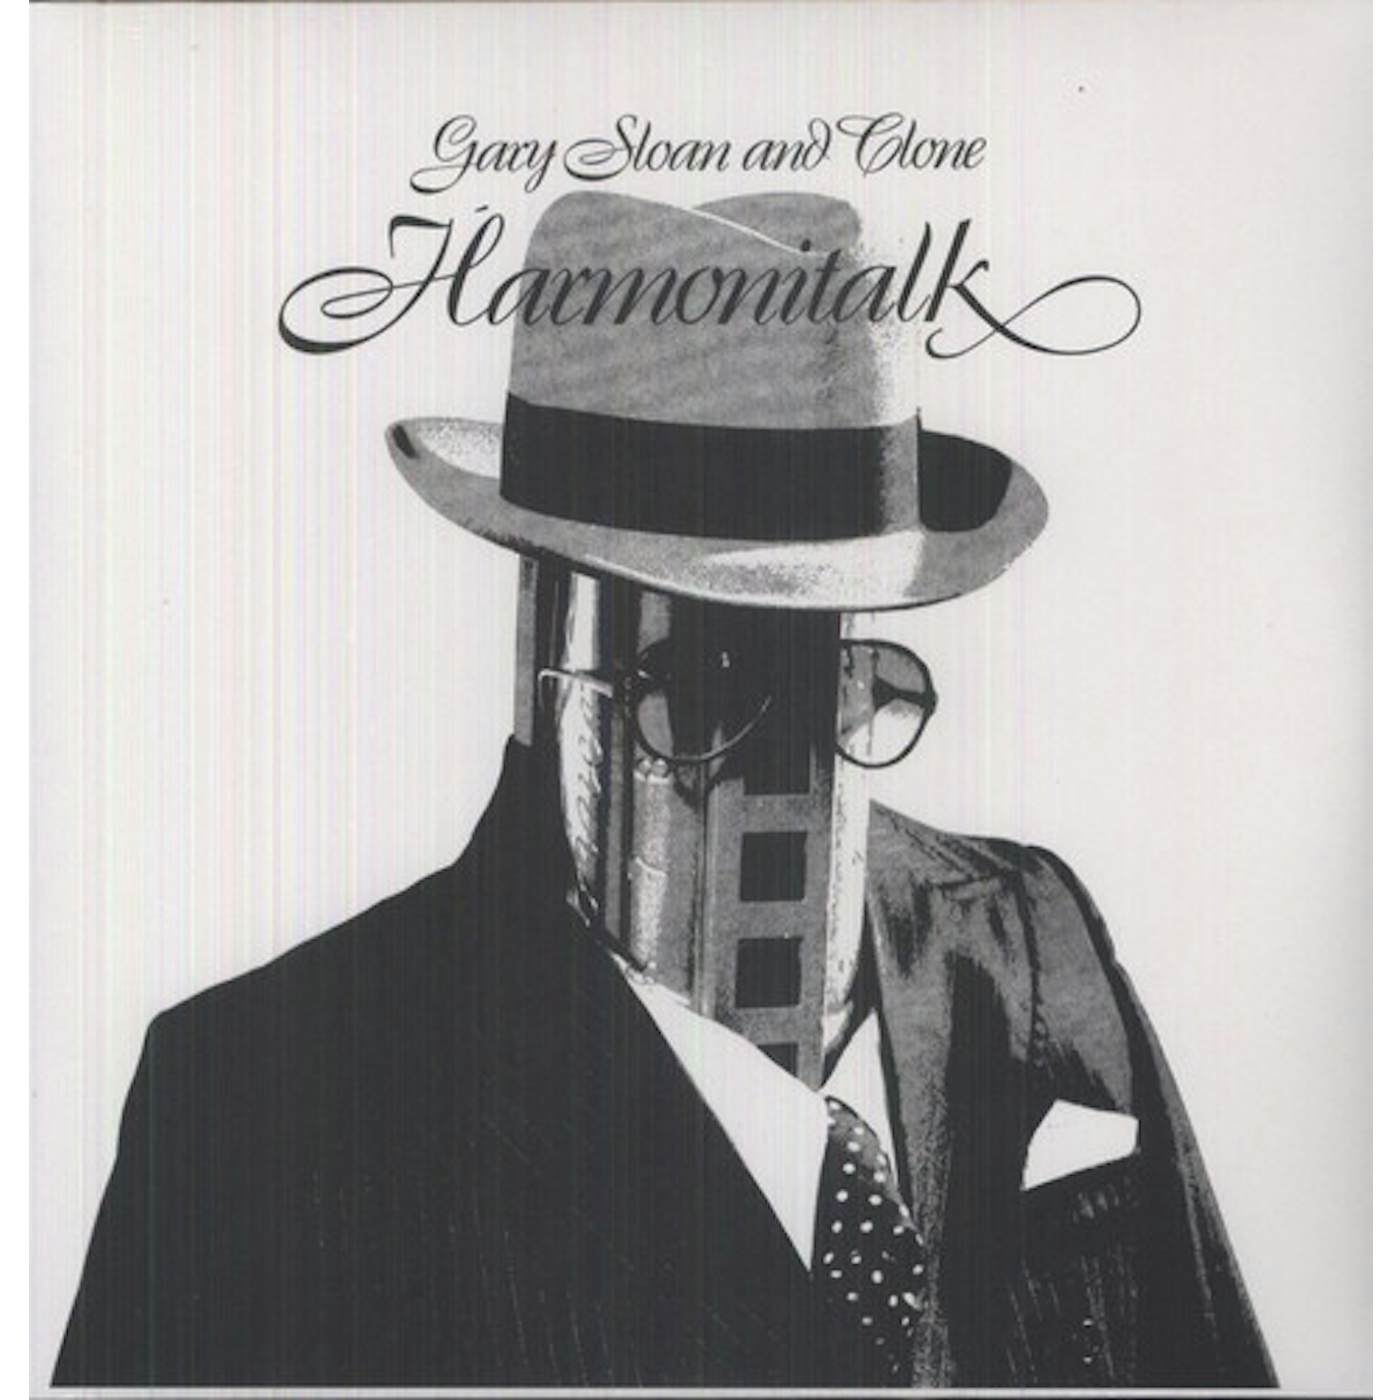 Gary Sloan and Clone Harmonitalk Vinyl Record